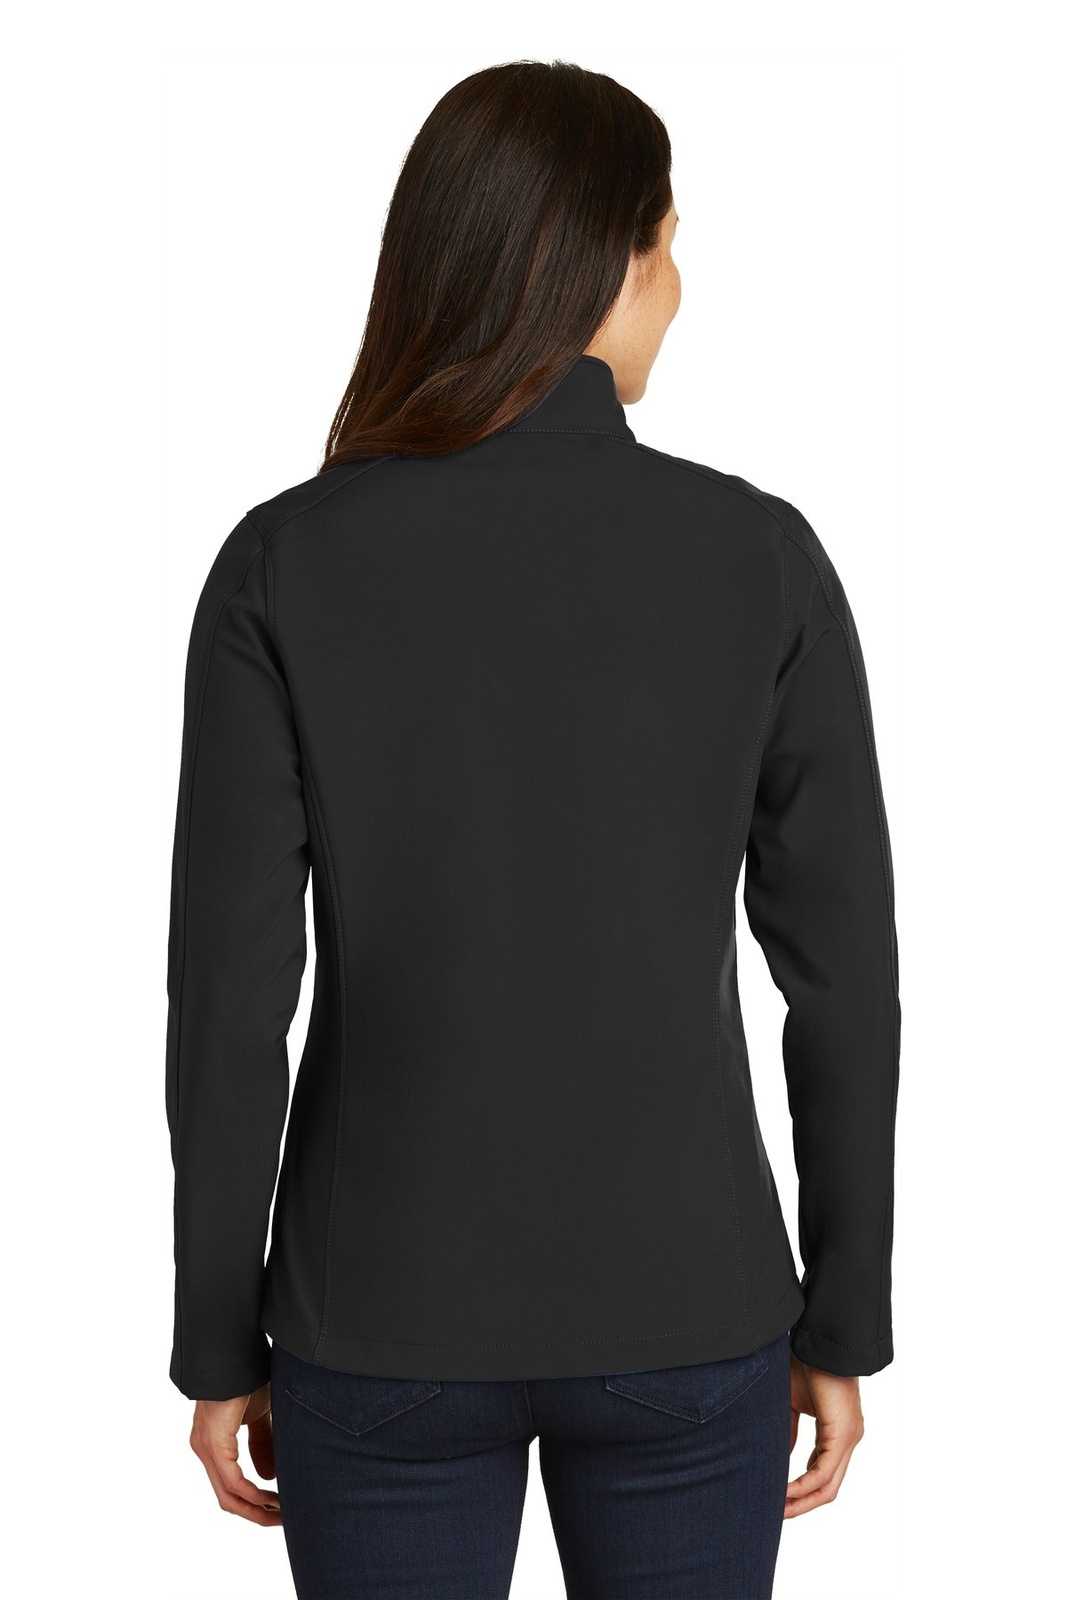 Port Authority L317 Ladies Core Soft Shell Jacket - Black - HIT a Double - 2